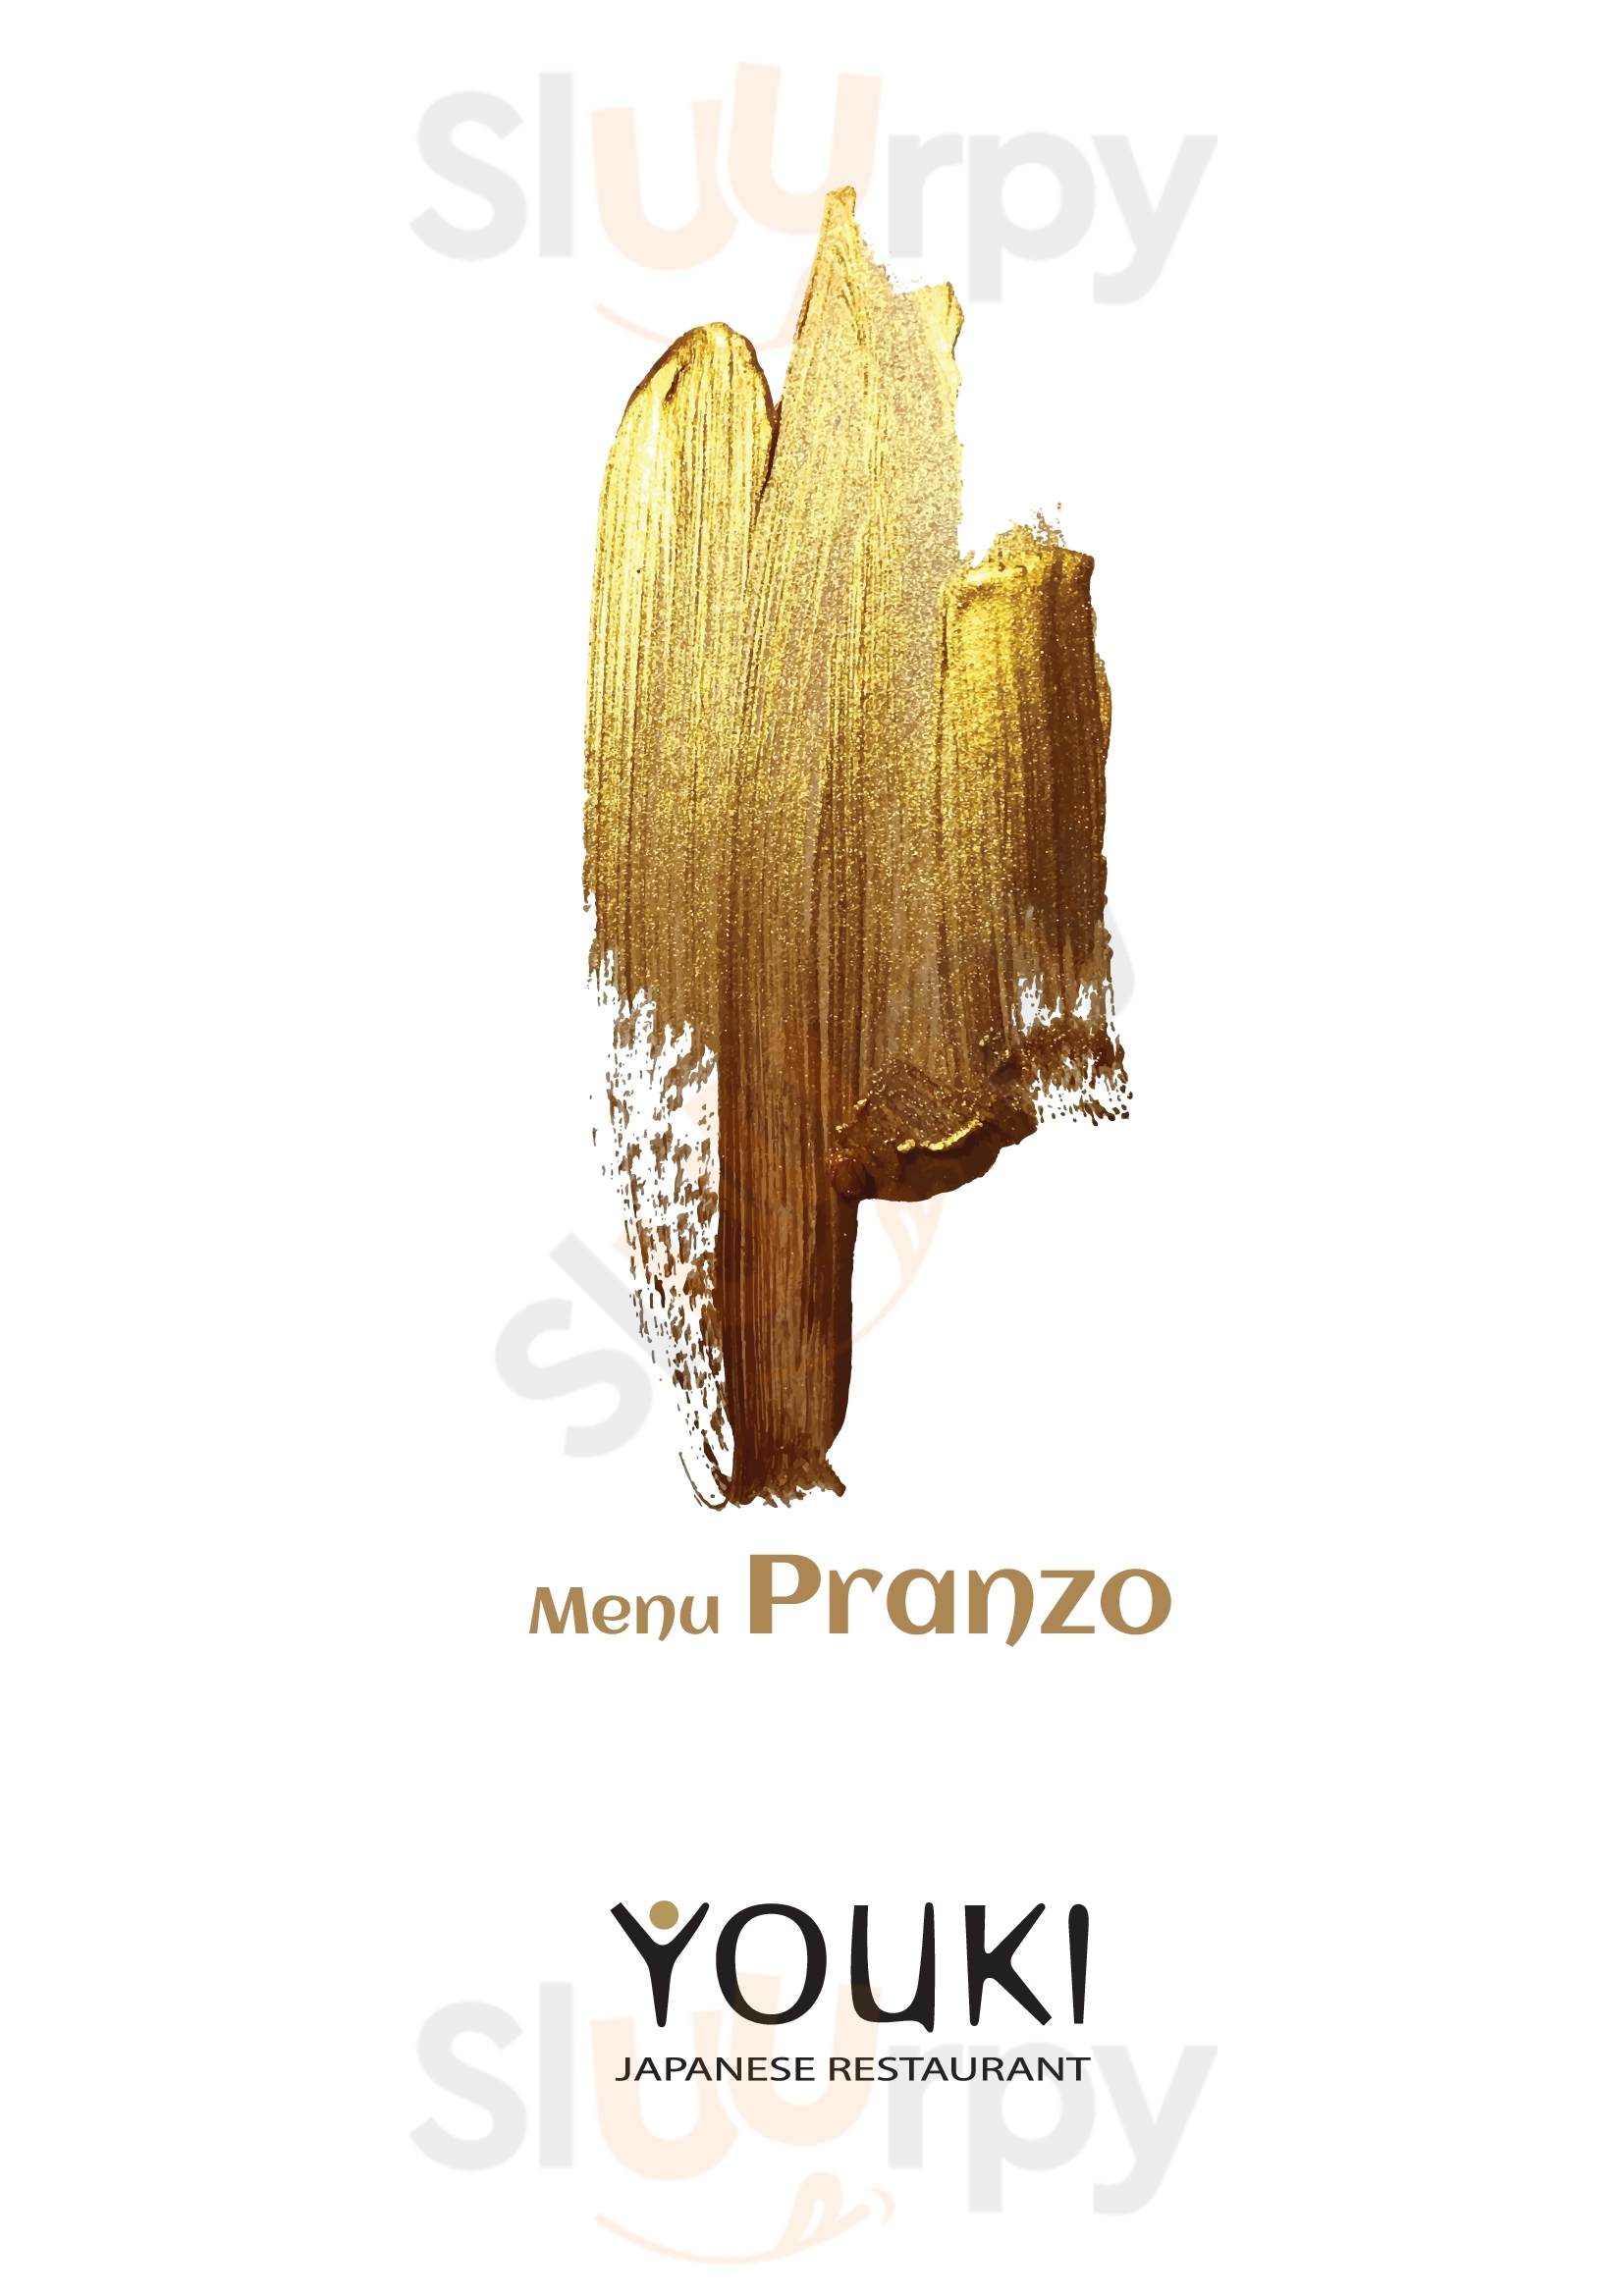 Youki Japanese Restaurant Pregnana Milanese menù 1 pagina